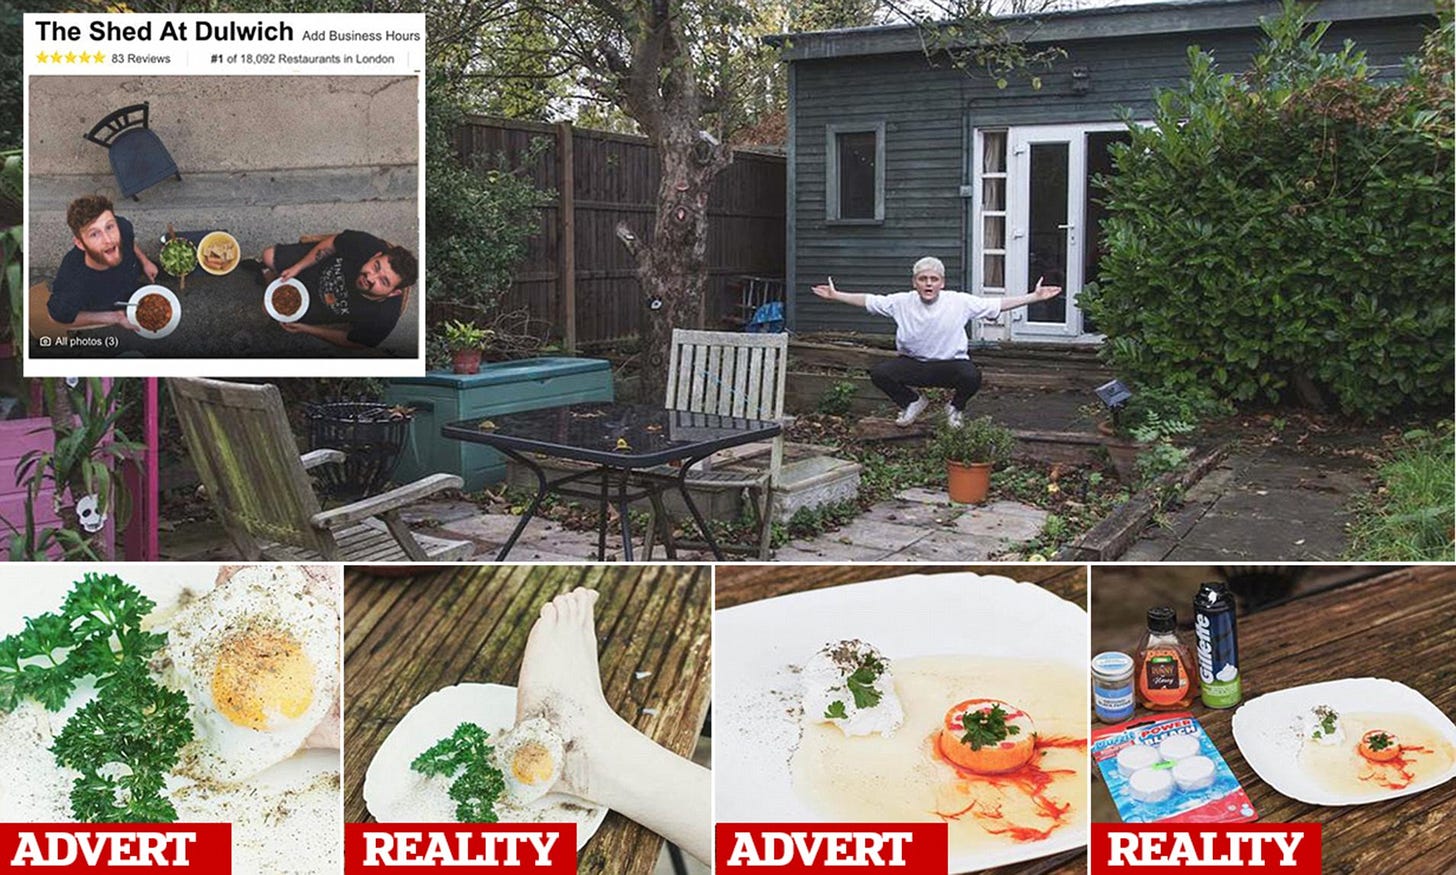 Prankster gets TripAdvisor to make restaurant number 1 | Daily Mail Online